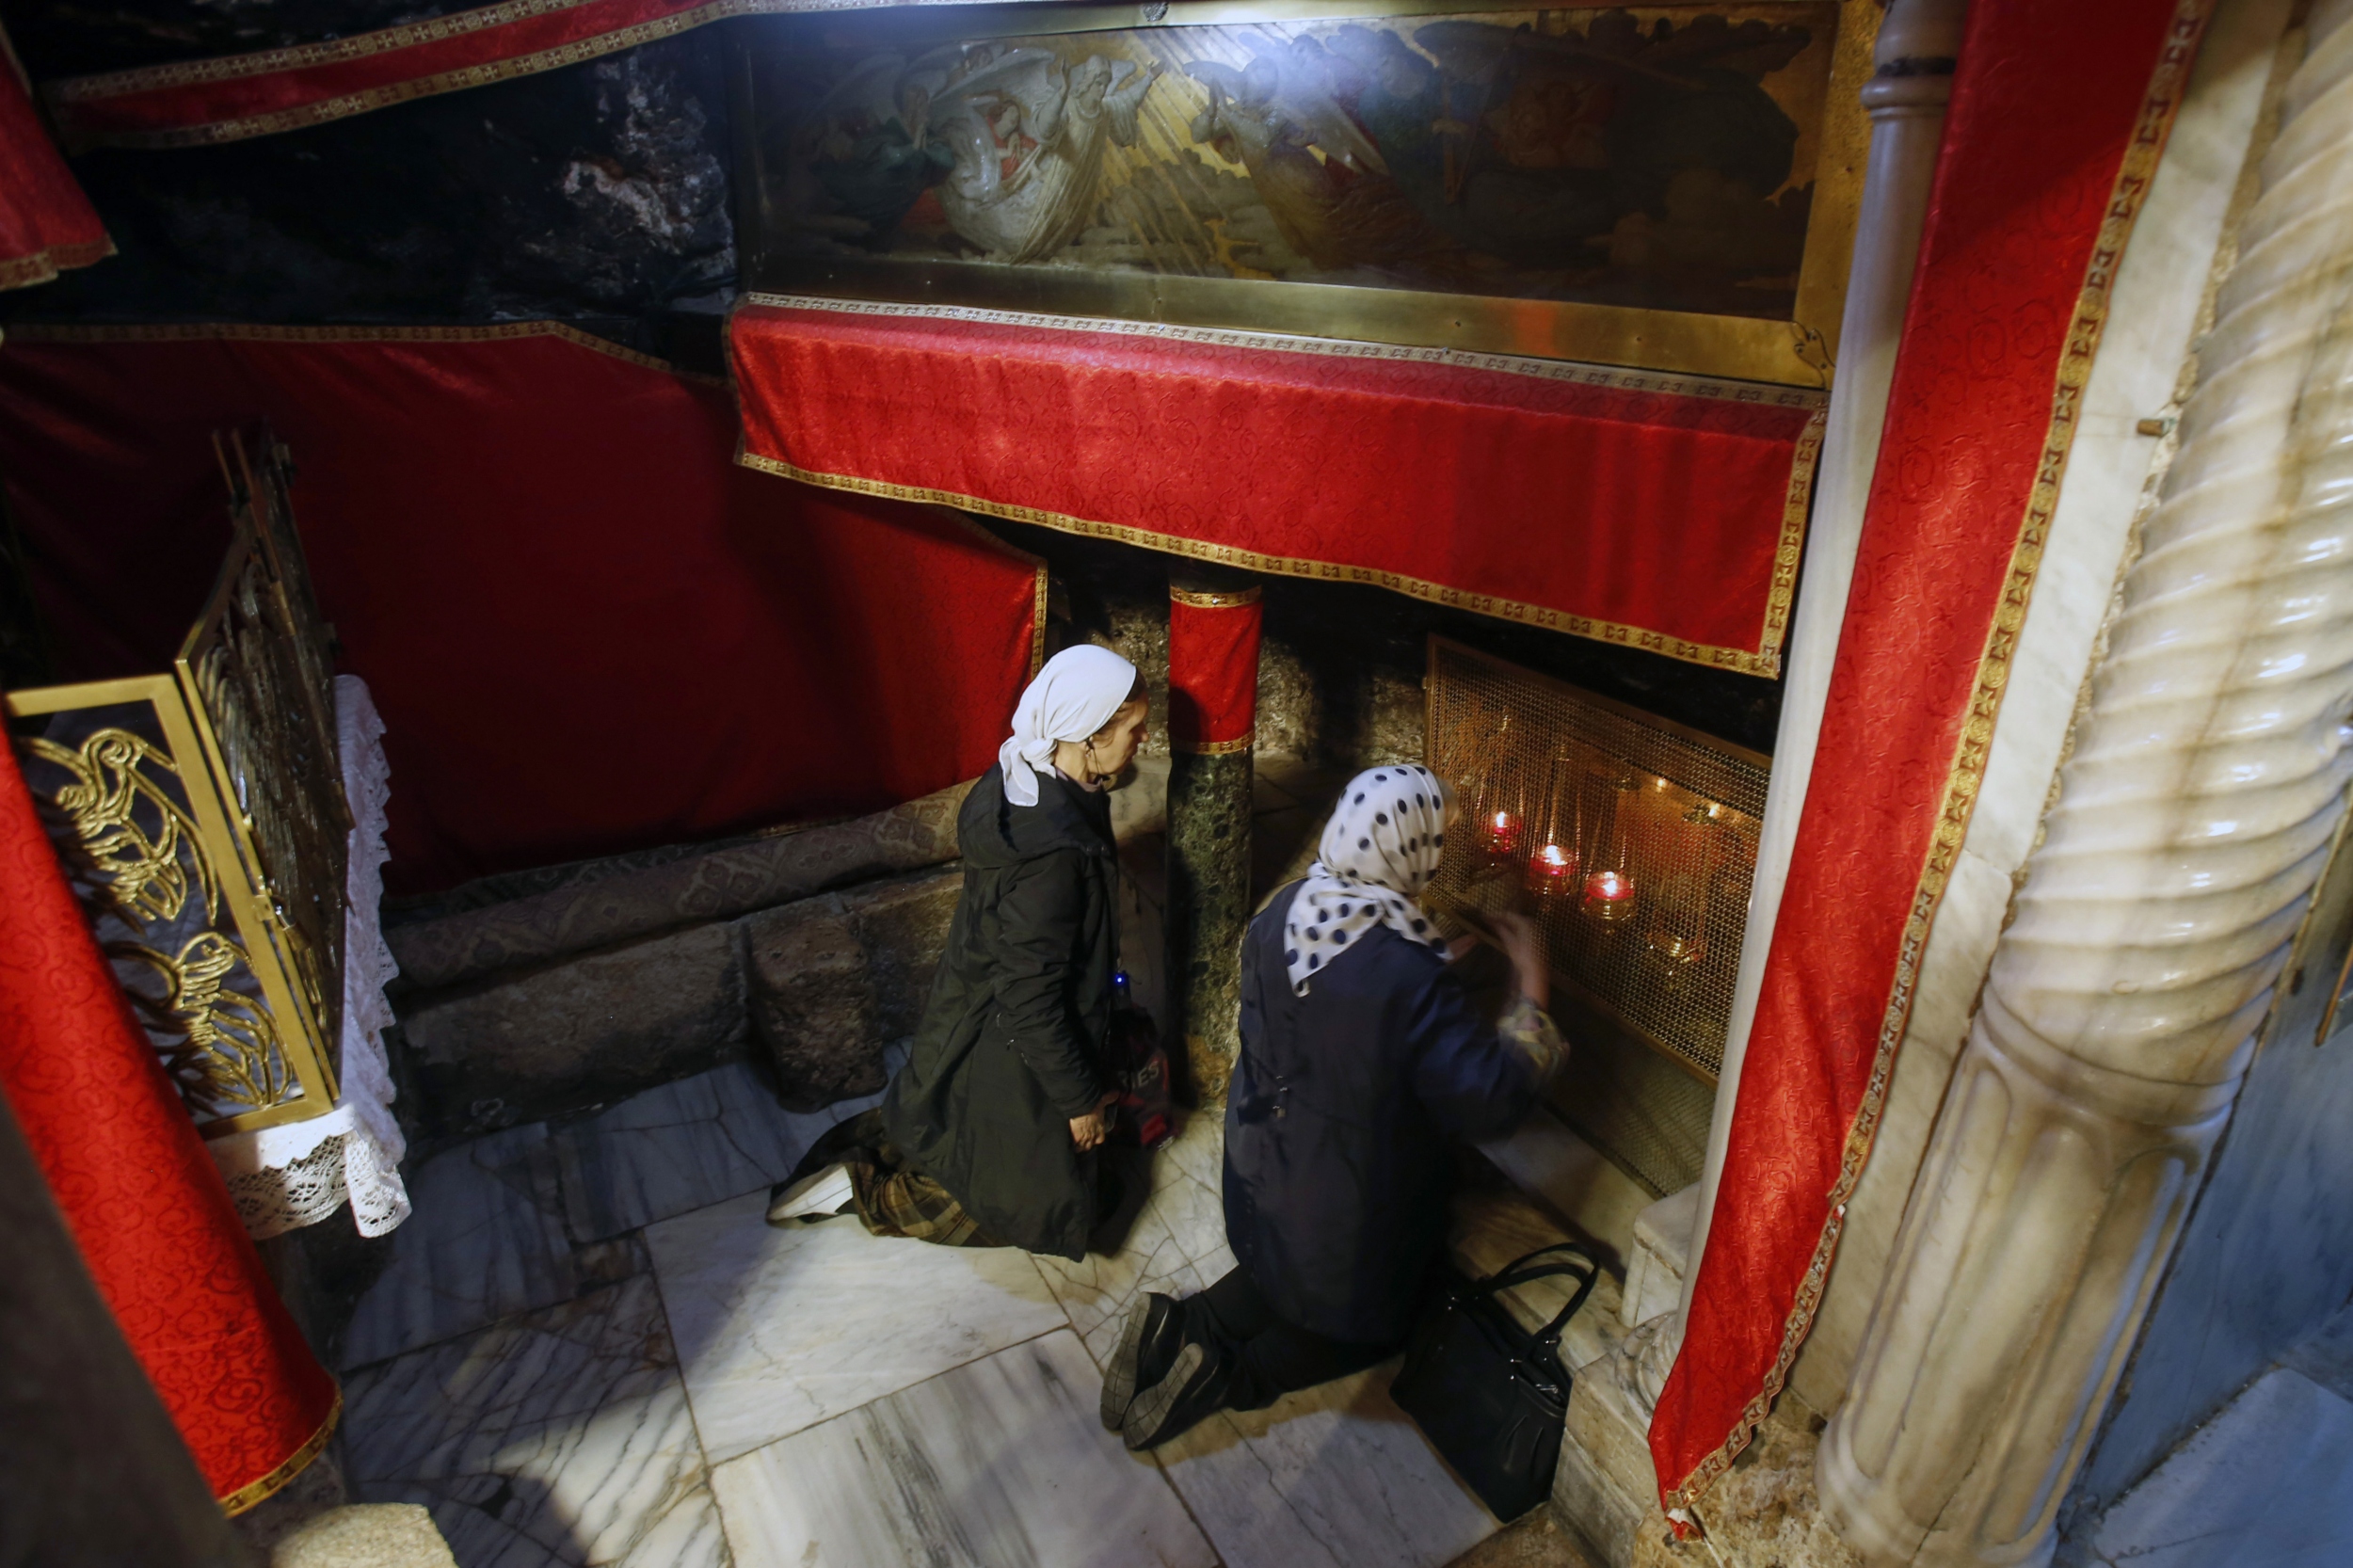 Christians pray at the Church of the Nativity in Bethlehem